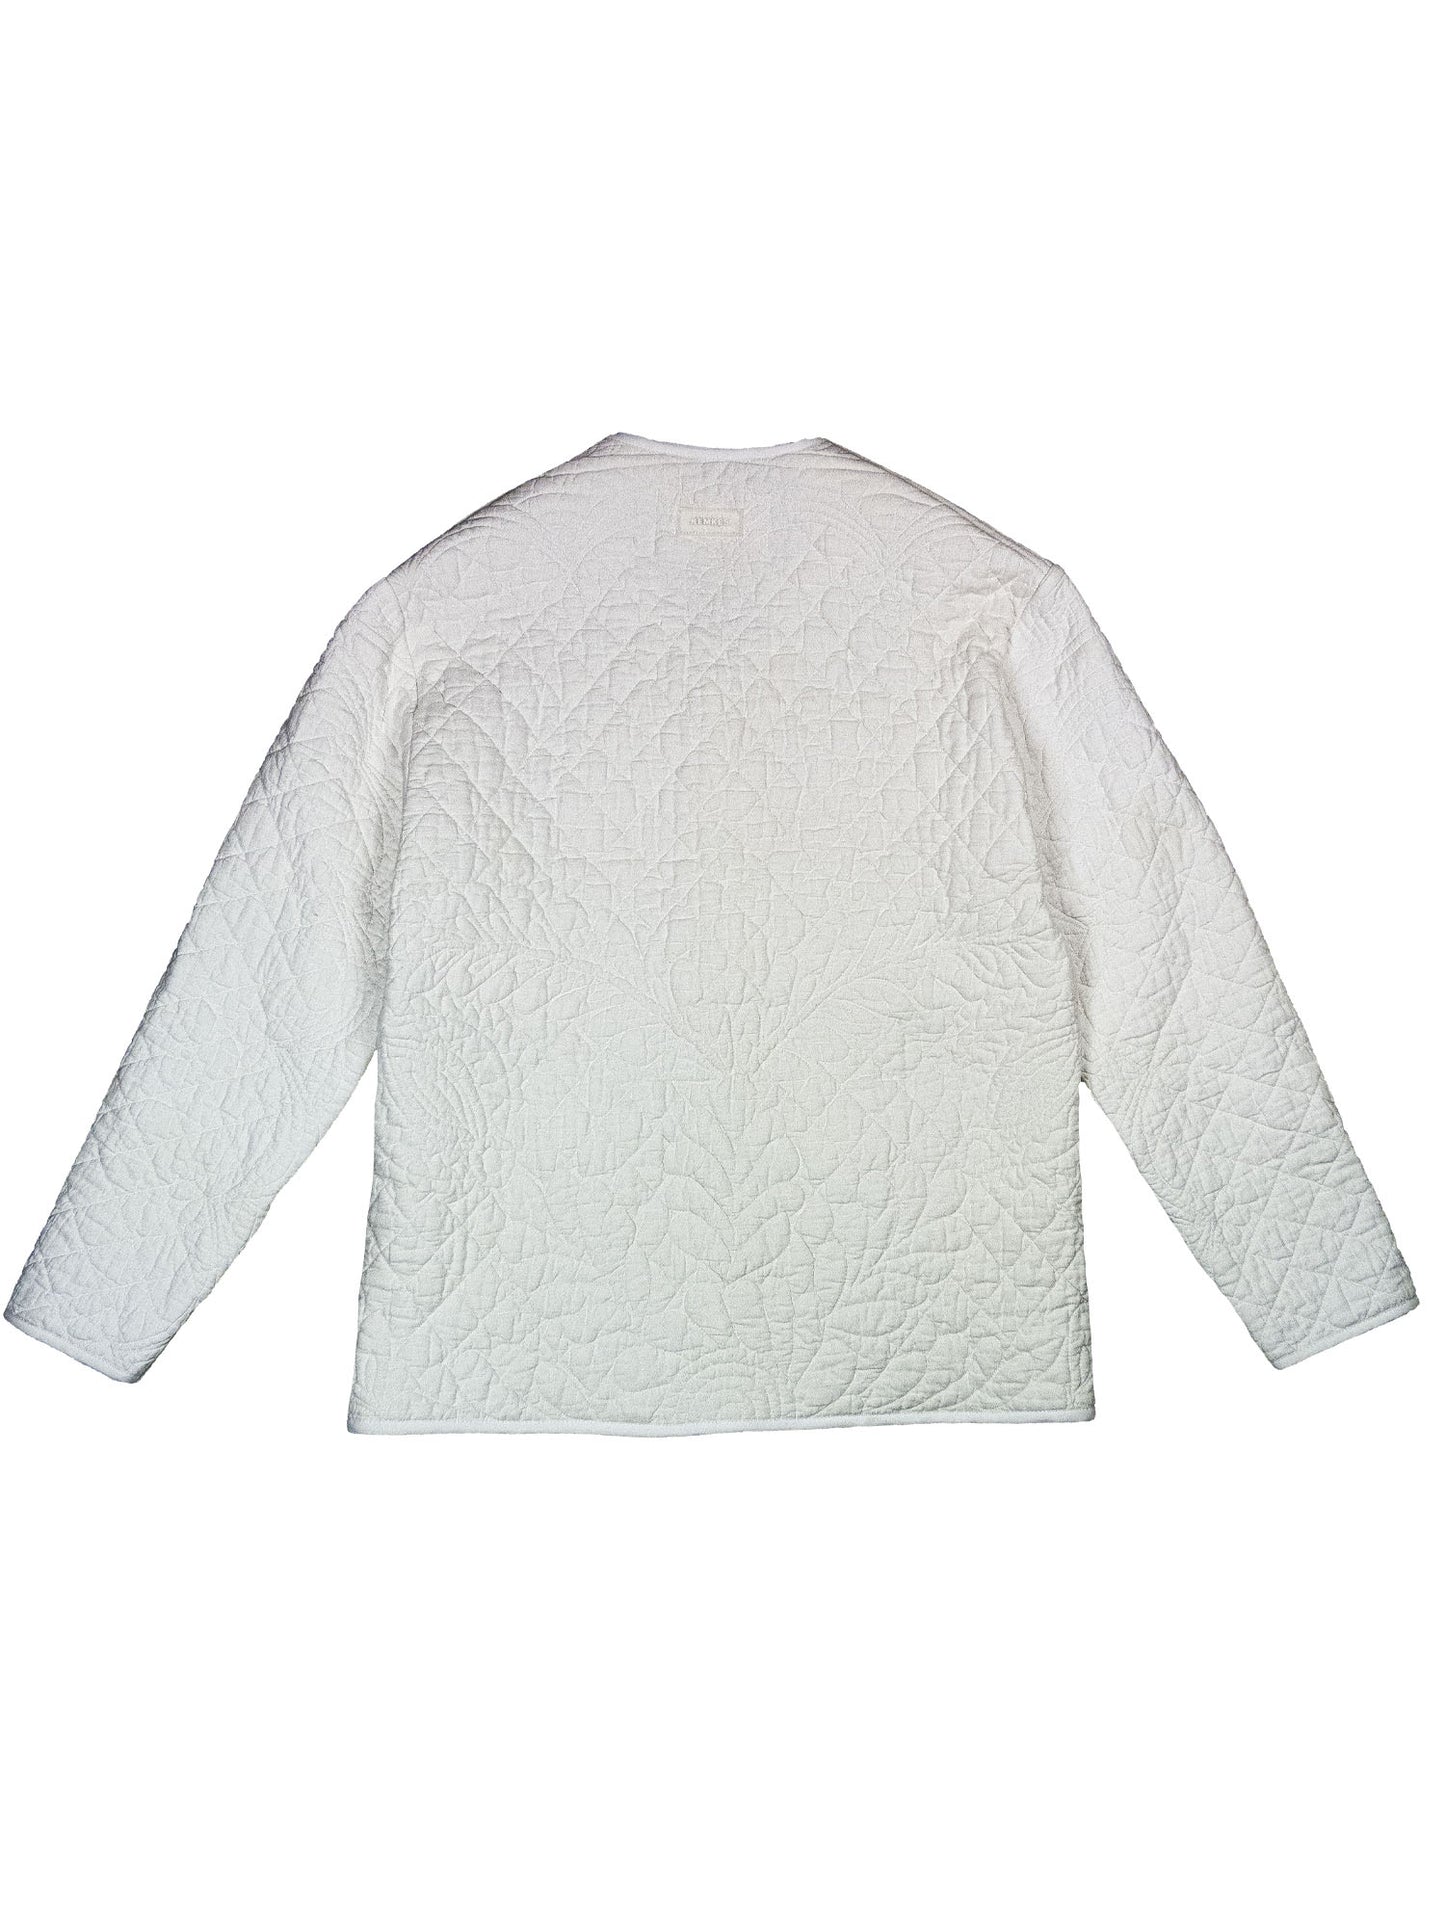 Jacket white quilt S